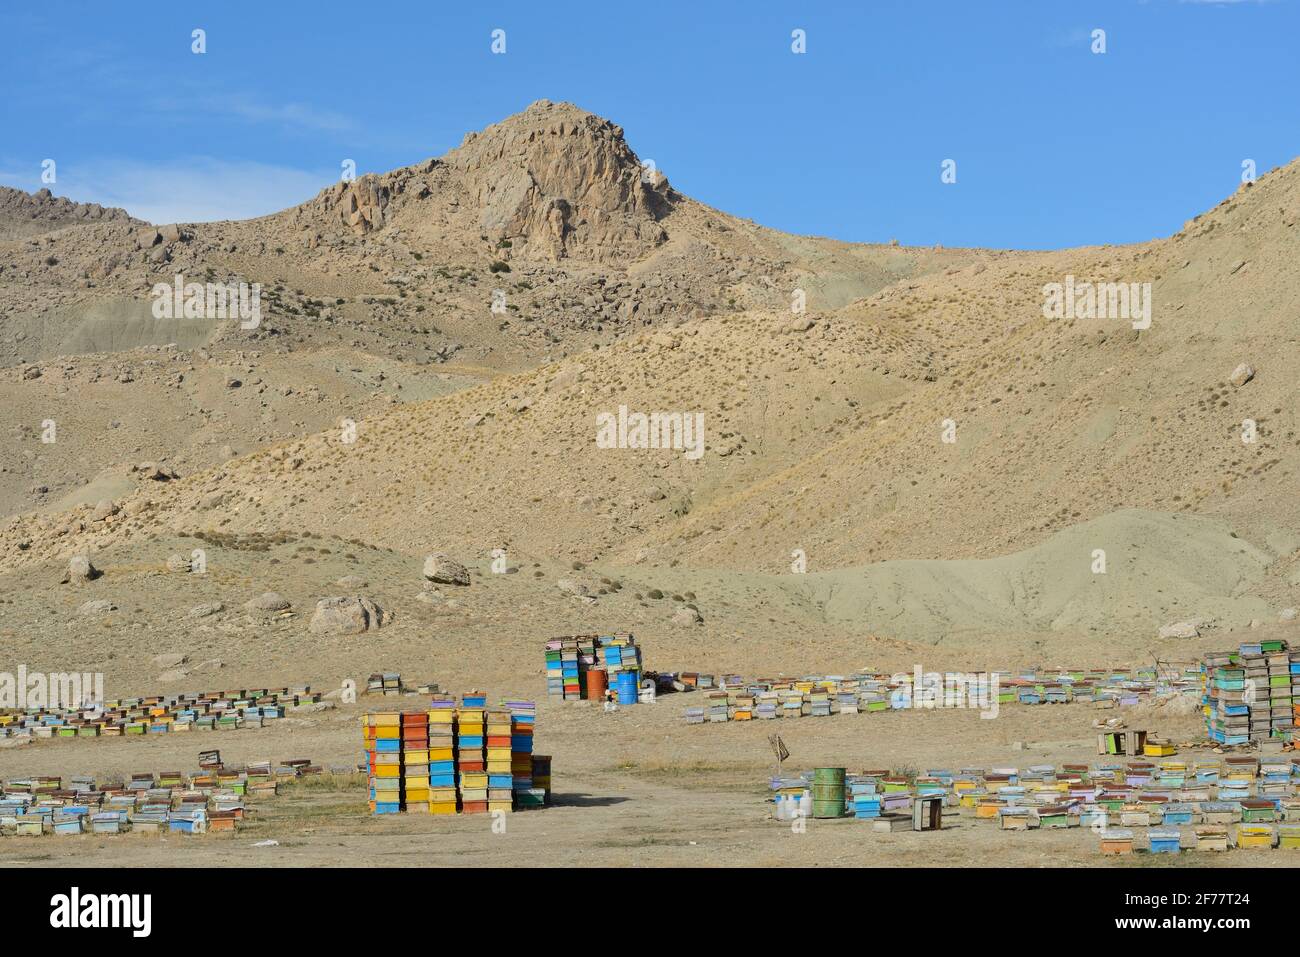 Iran, West Azerbaijan province, Maku region, Beehives Stock Photo